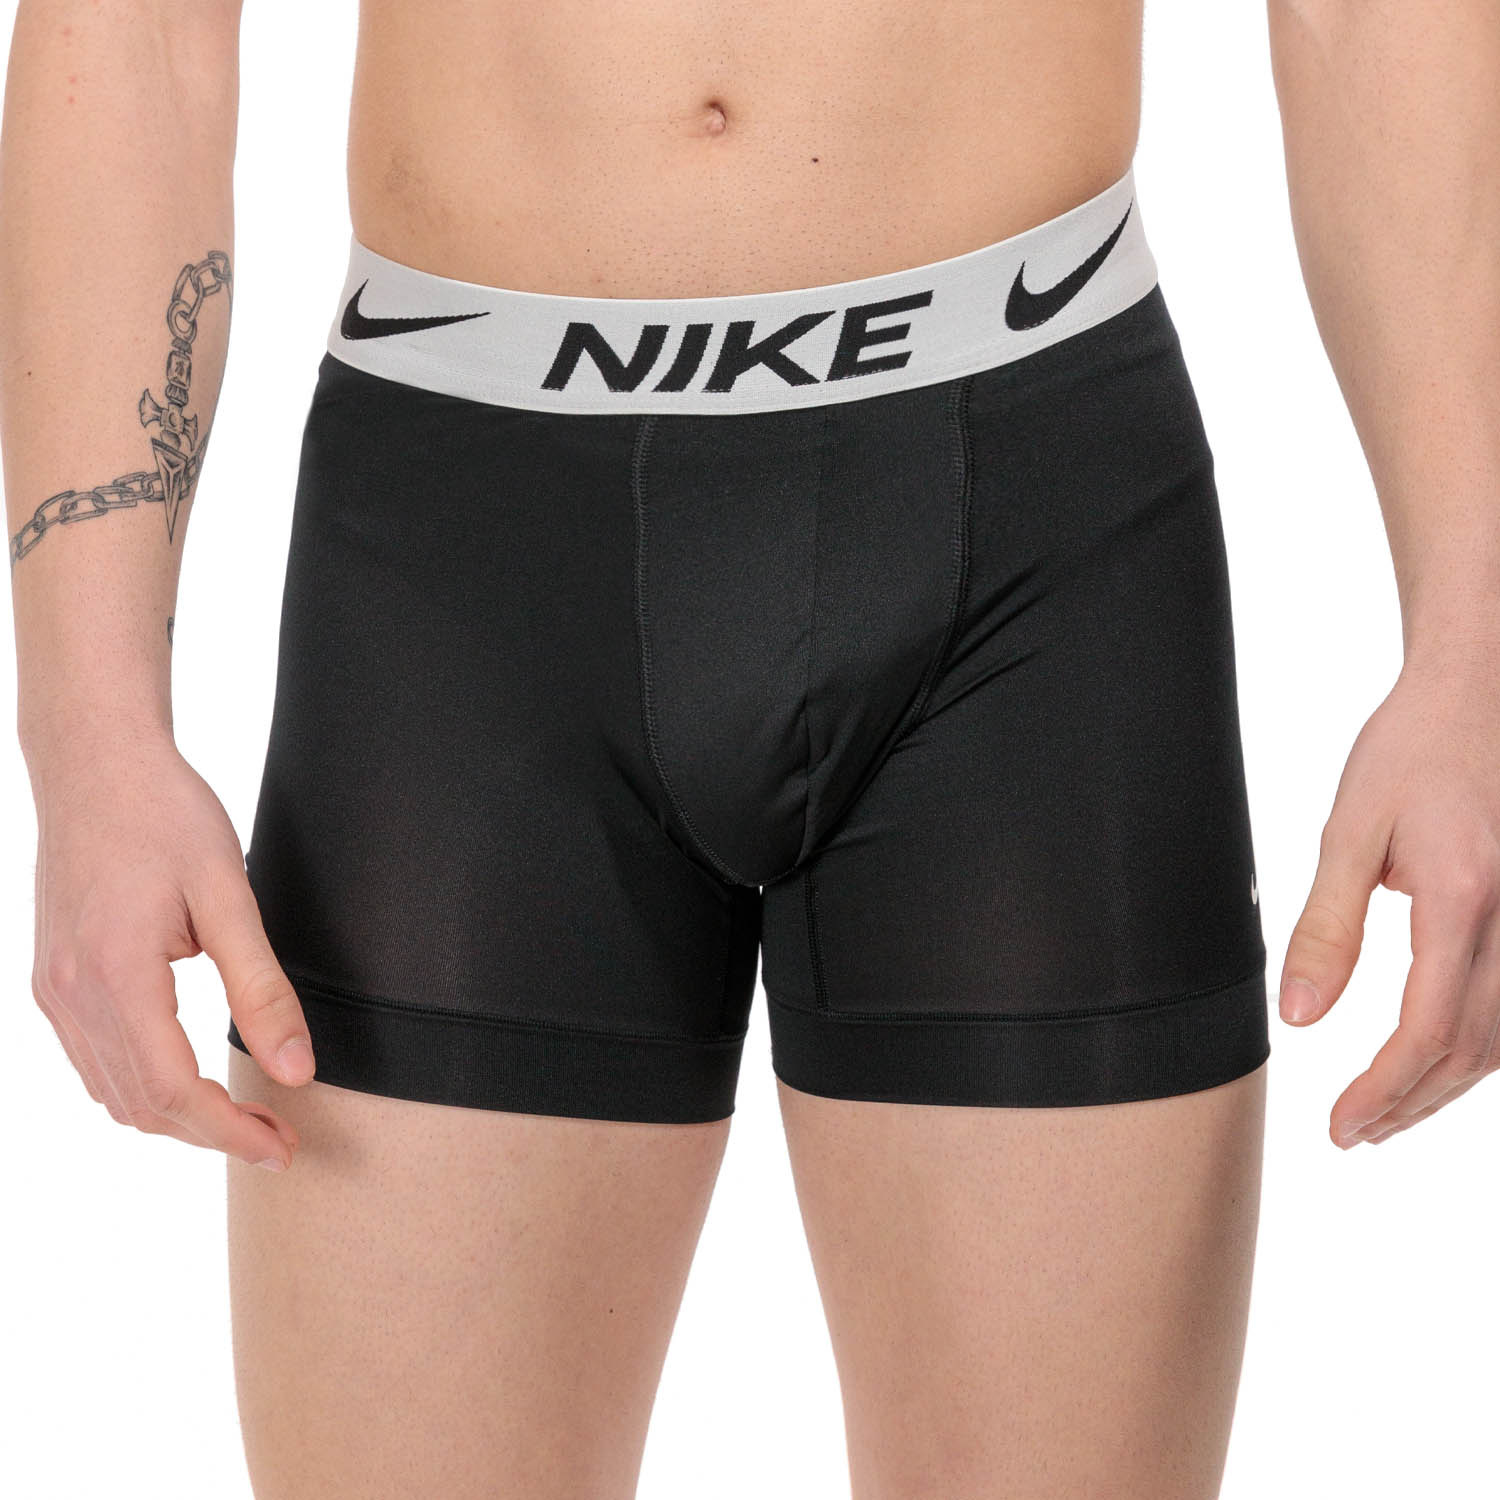 Nike Dri-FIT Performance x 3 Men's Underwear Long Boxers Black